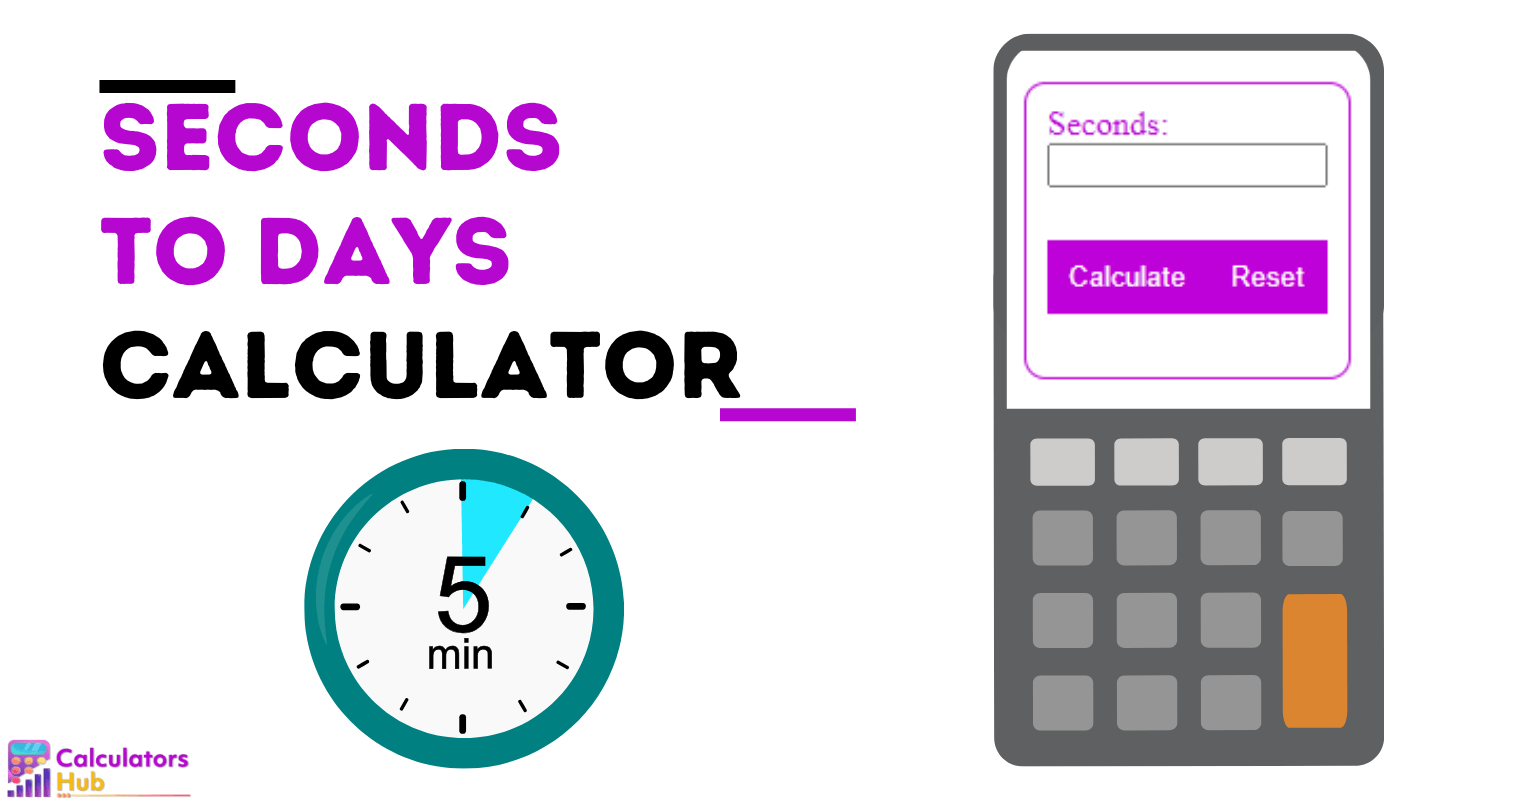 Seconds to Days Calculator